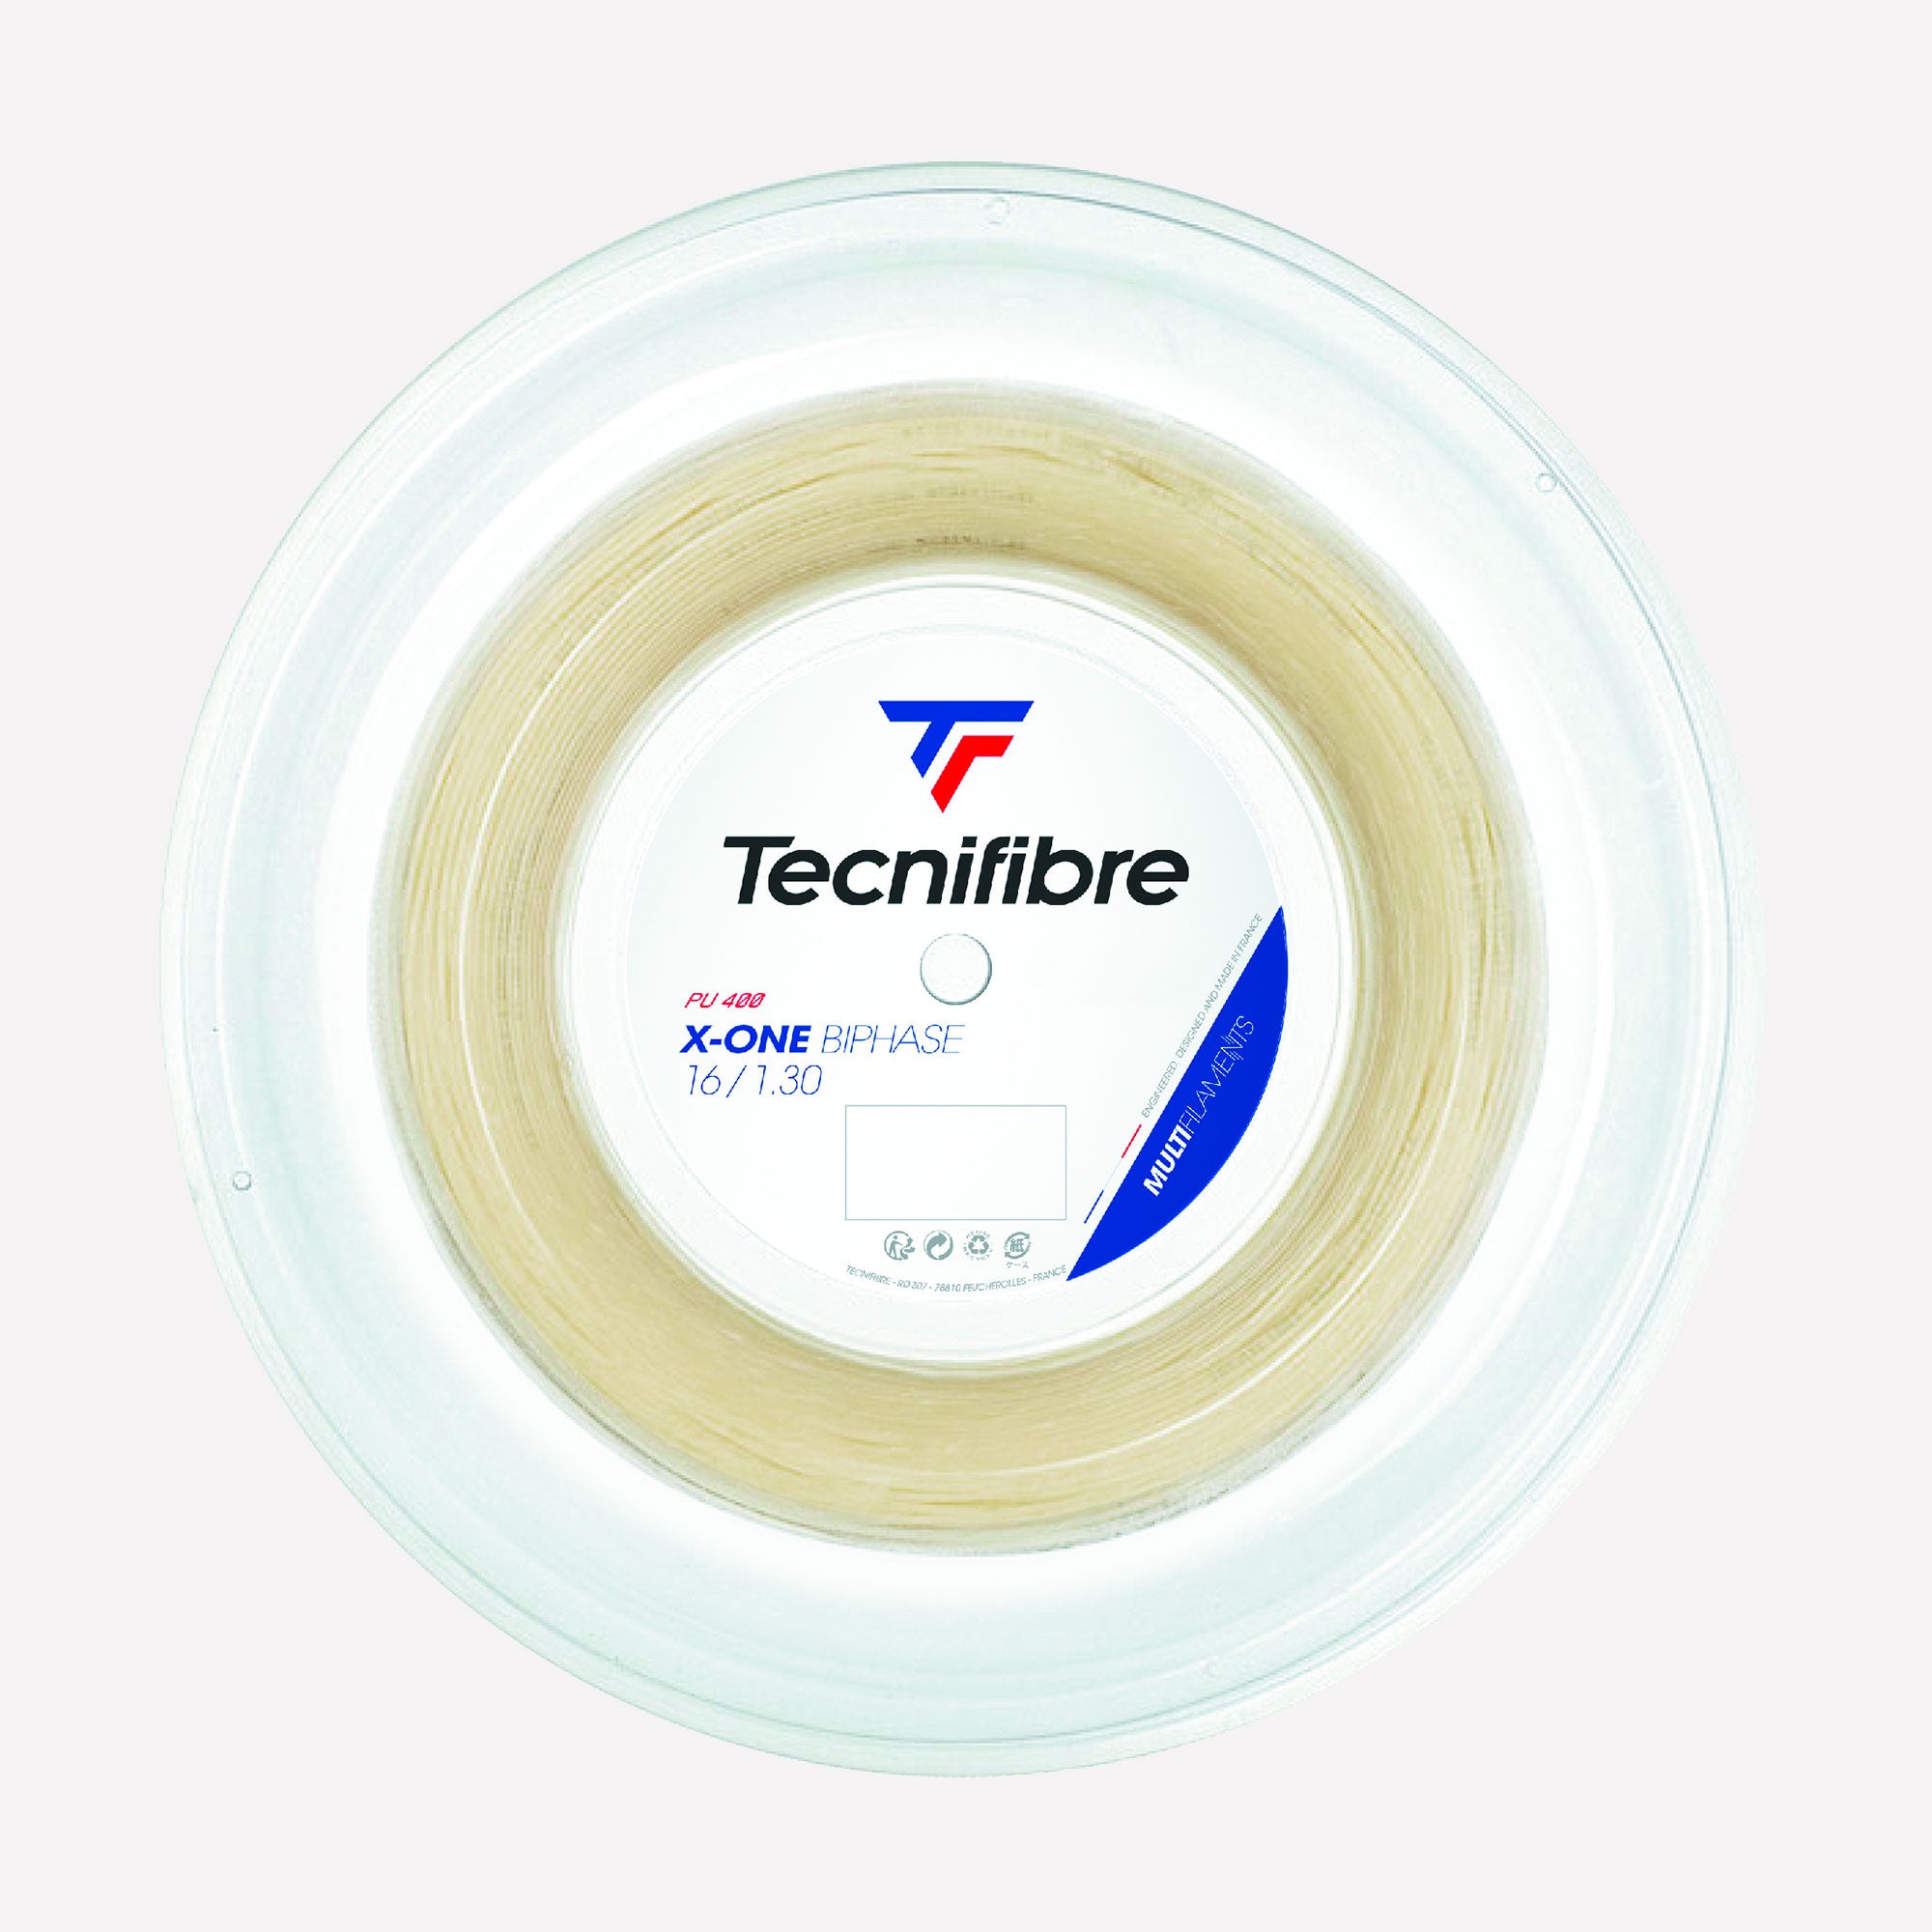 Tecnifibre X-One Biphase Tennis String Reel 200 m - Natural (1)